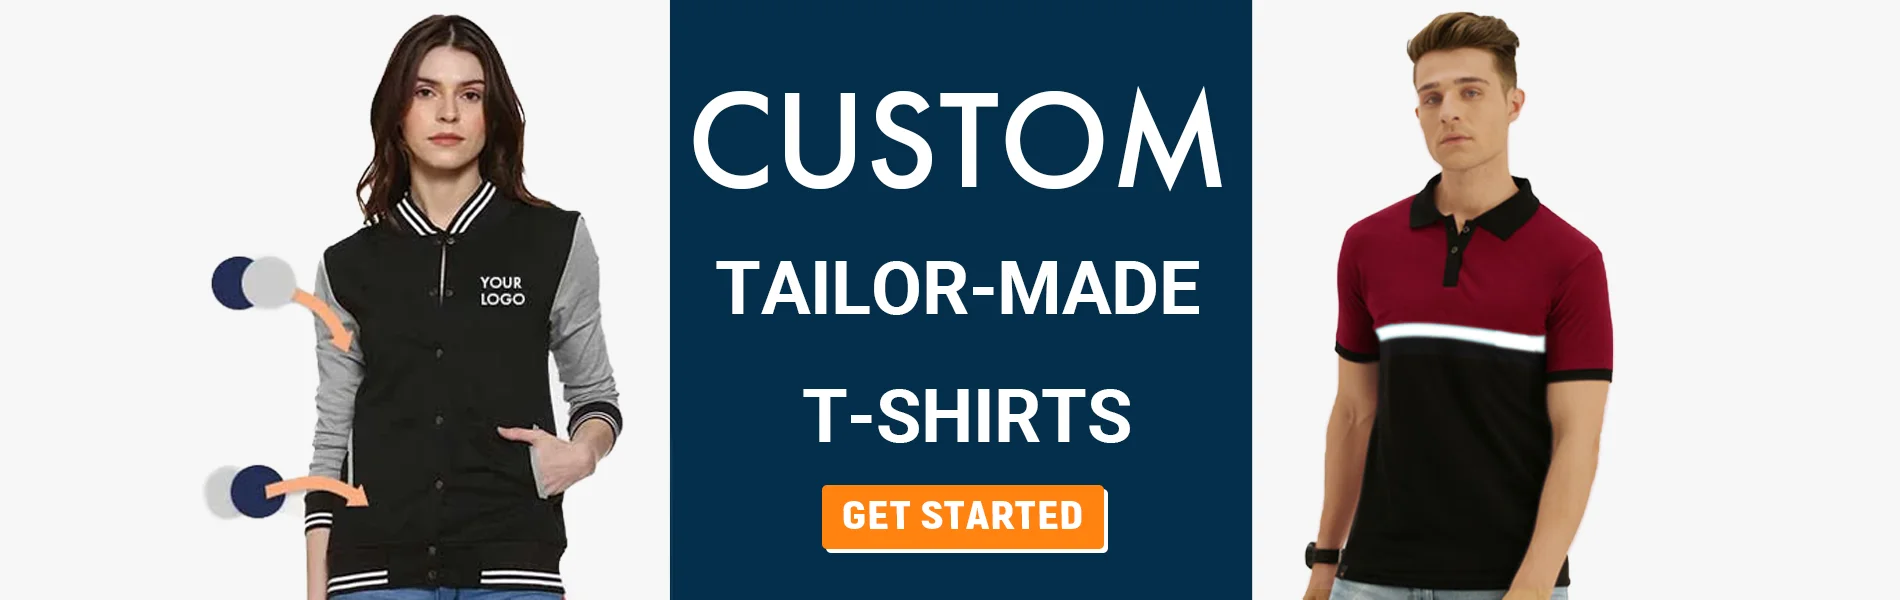 custom tailormade t-shirts kolkata